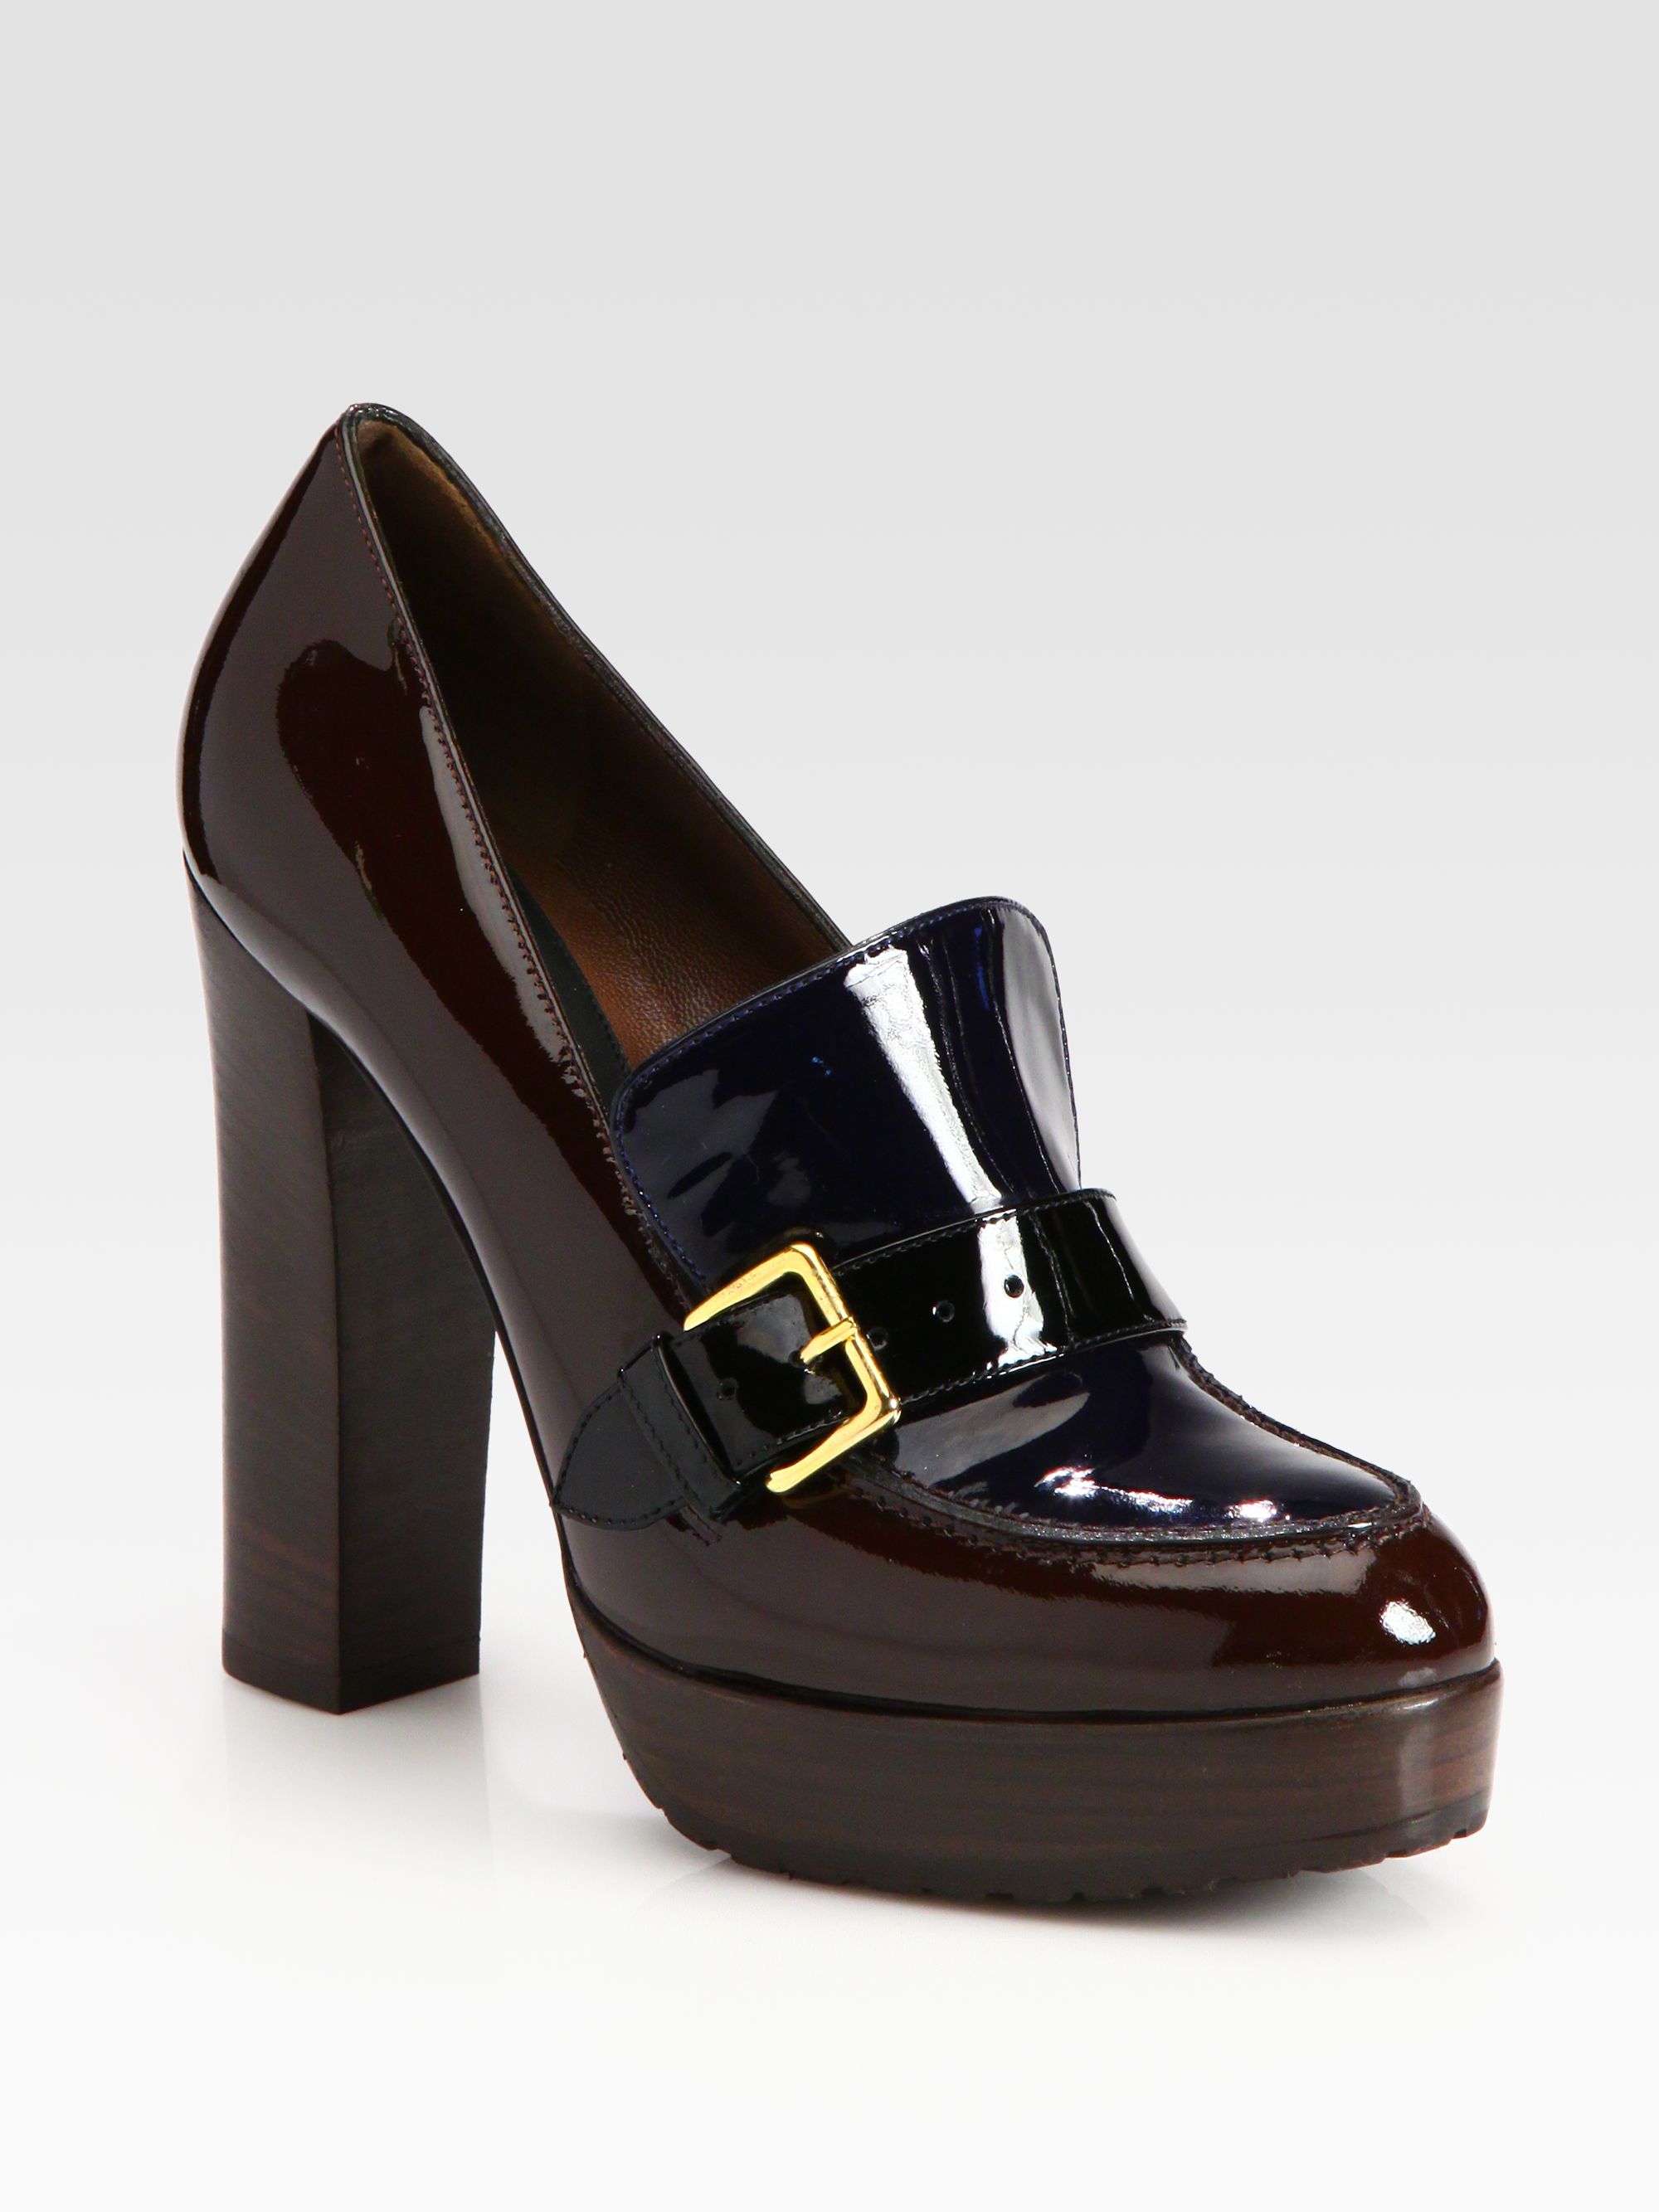 Marni Bicolor Patent Leather Loafer Pumps in Burgundy-Black (Black) - Lyst